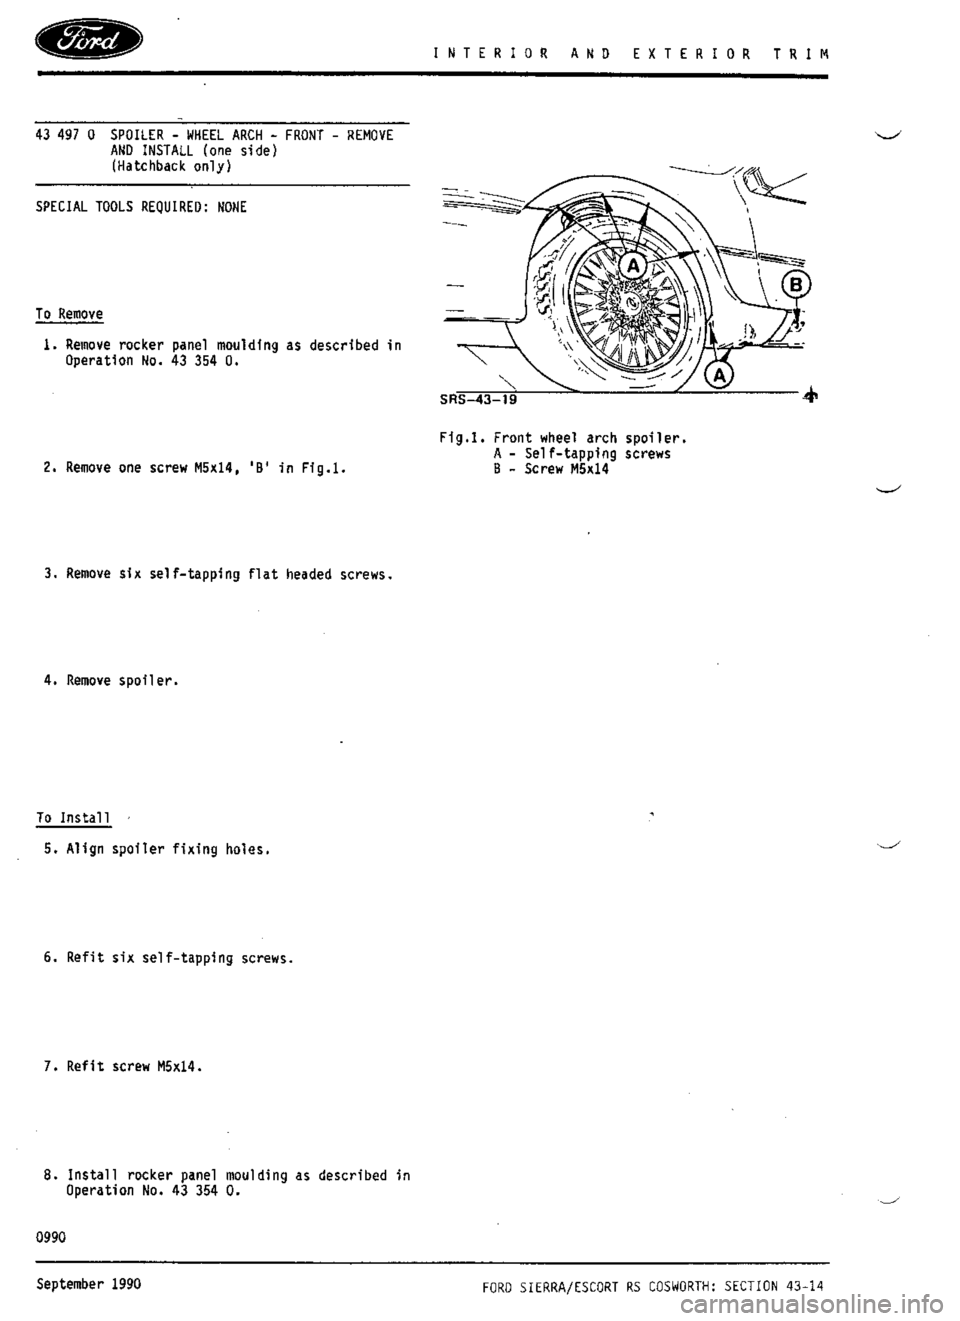 FORD SIERRA RS COSWORTH 1989 1.G Workshop Manual 